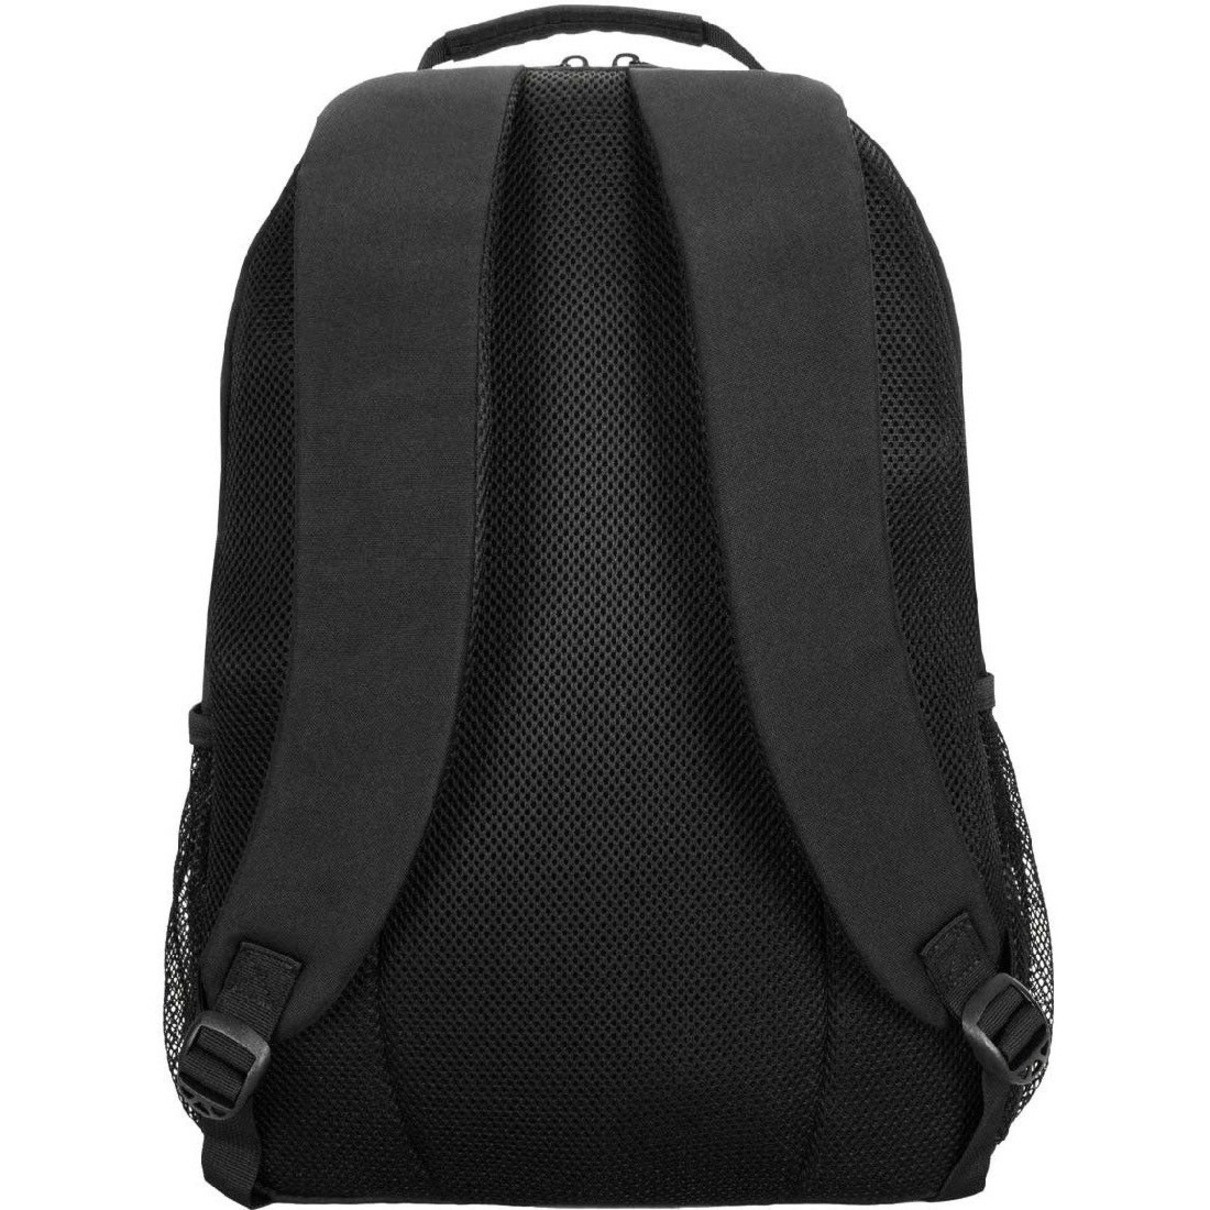 Targus Ascend TSB710US Carrying Case (Backpack) for 16″ NotebookBlackPolyester, Neoprene, MeshPolyester Exterior MaterialHandle, Sh… TSB710US